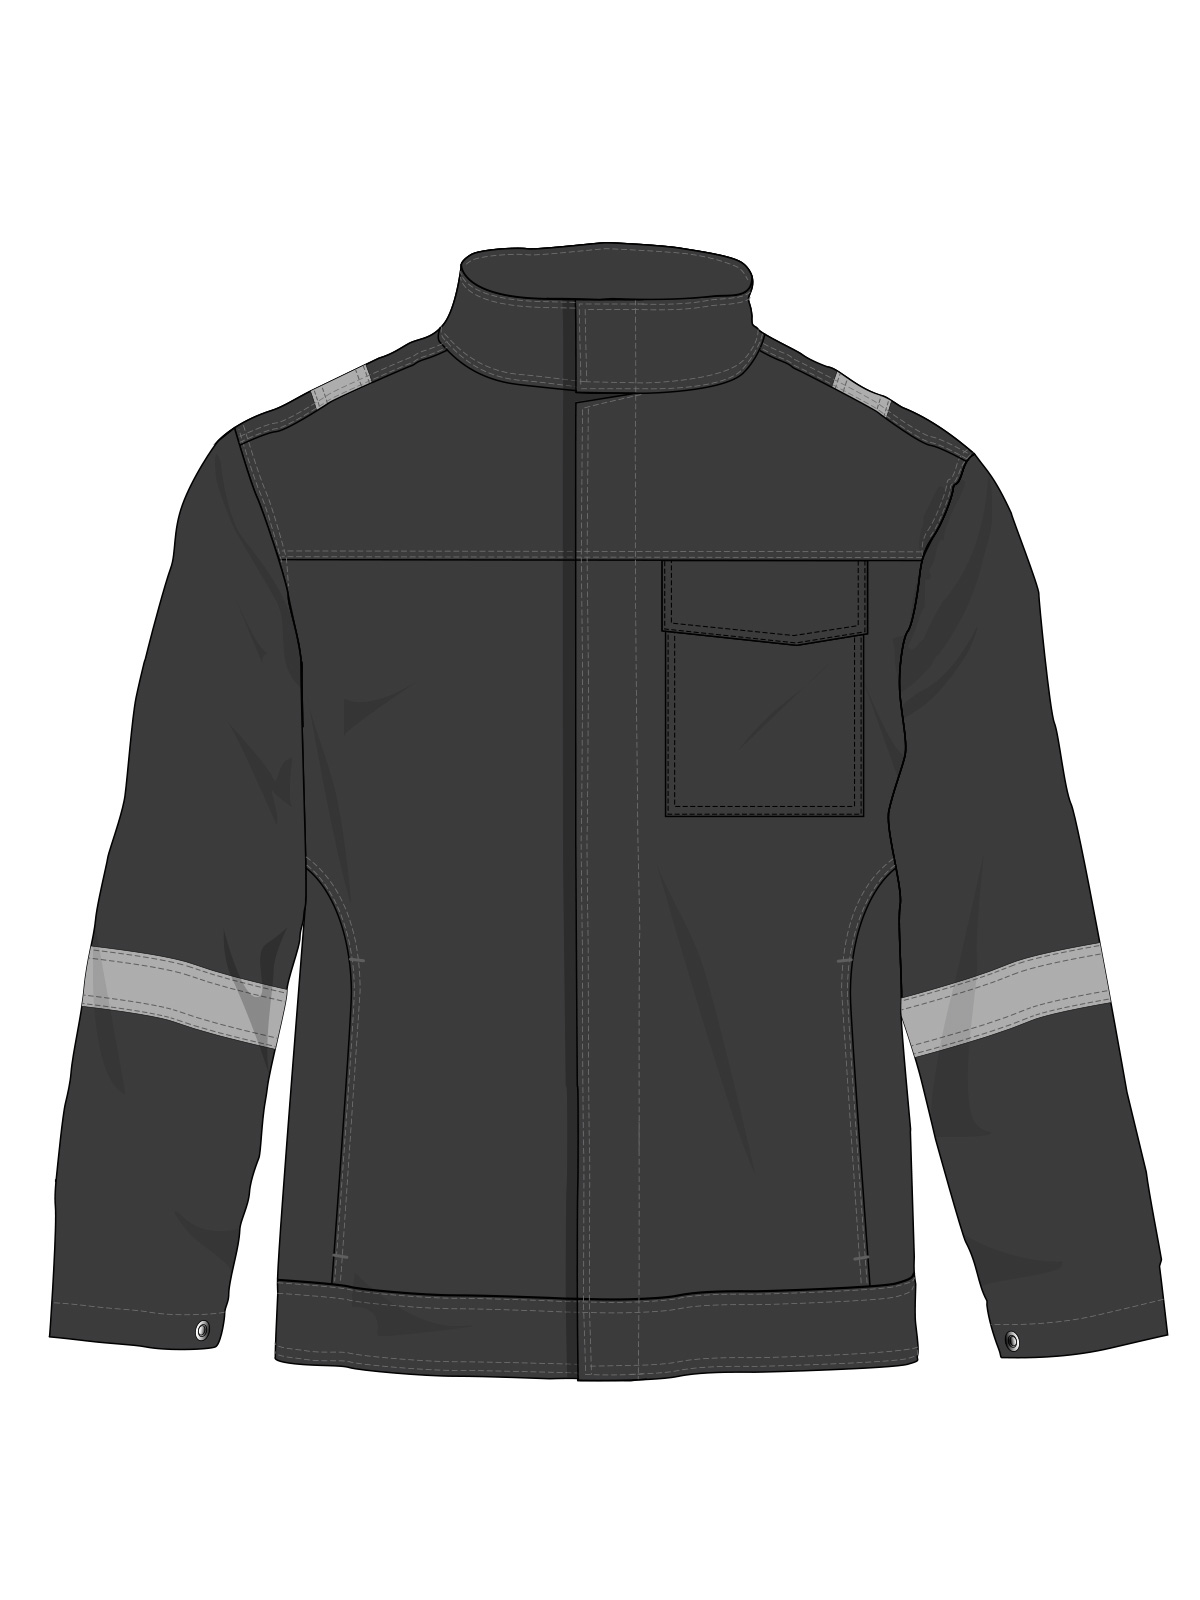 Kinetic Fire Resistant Jacket